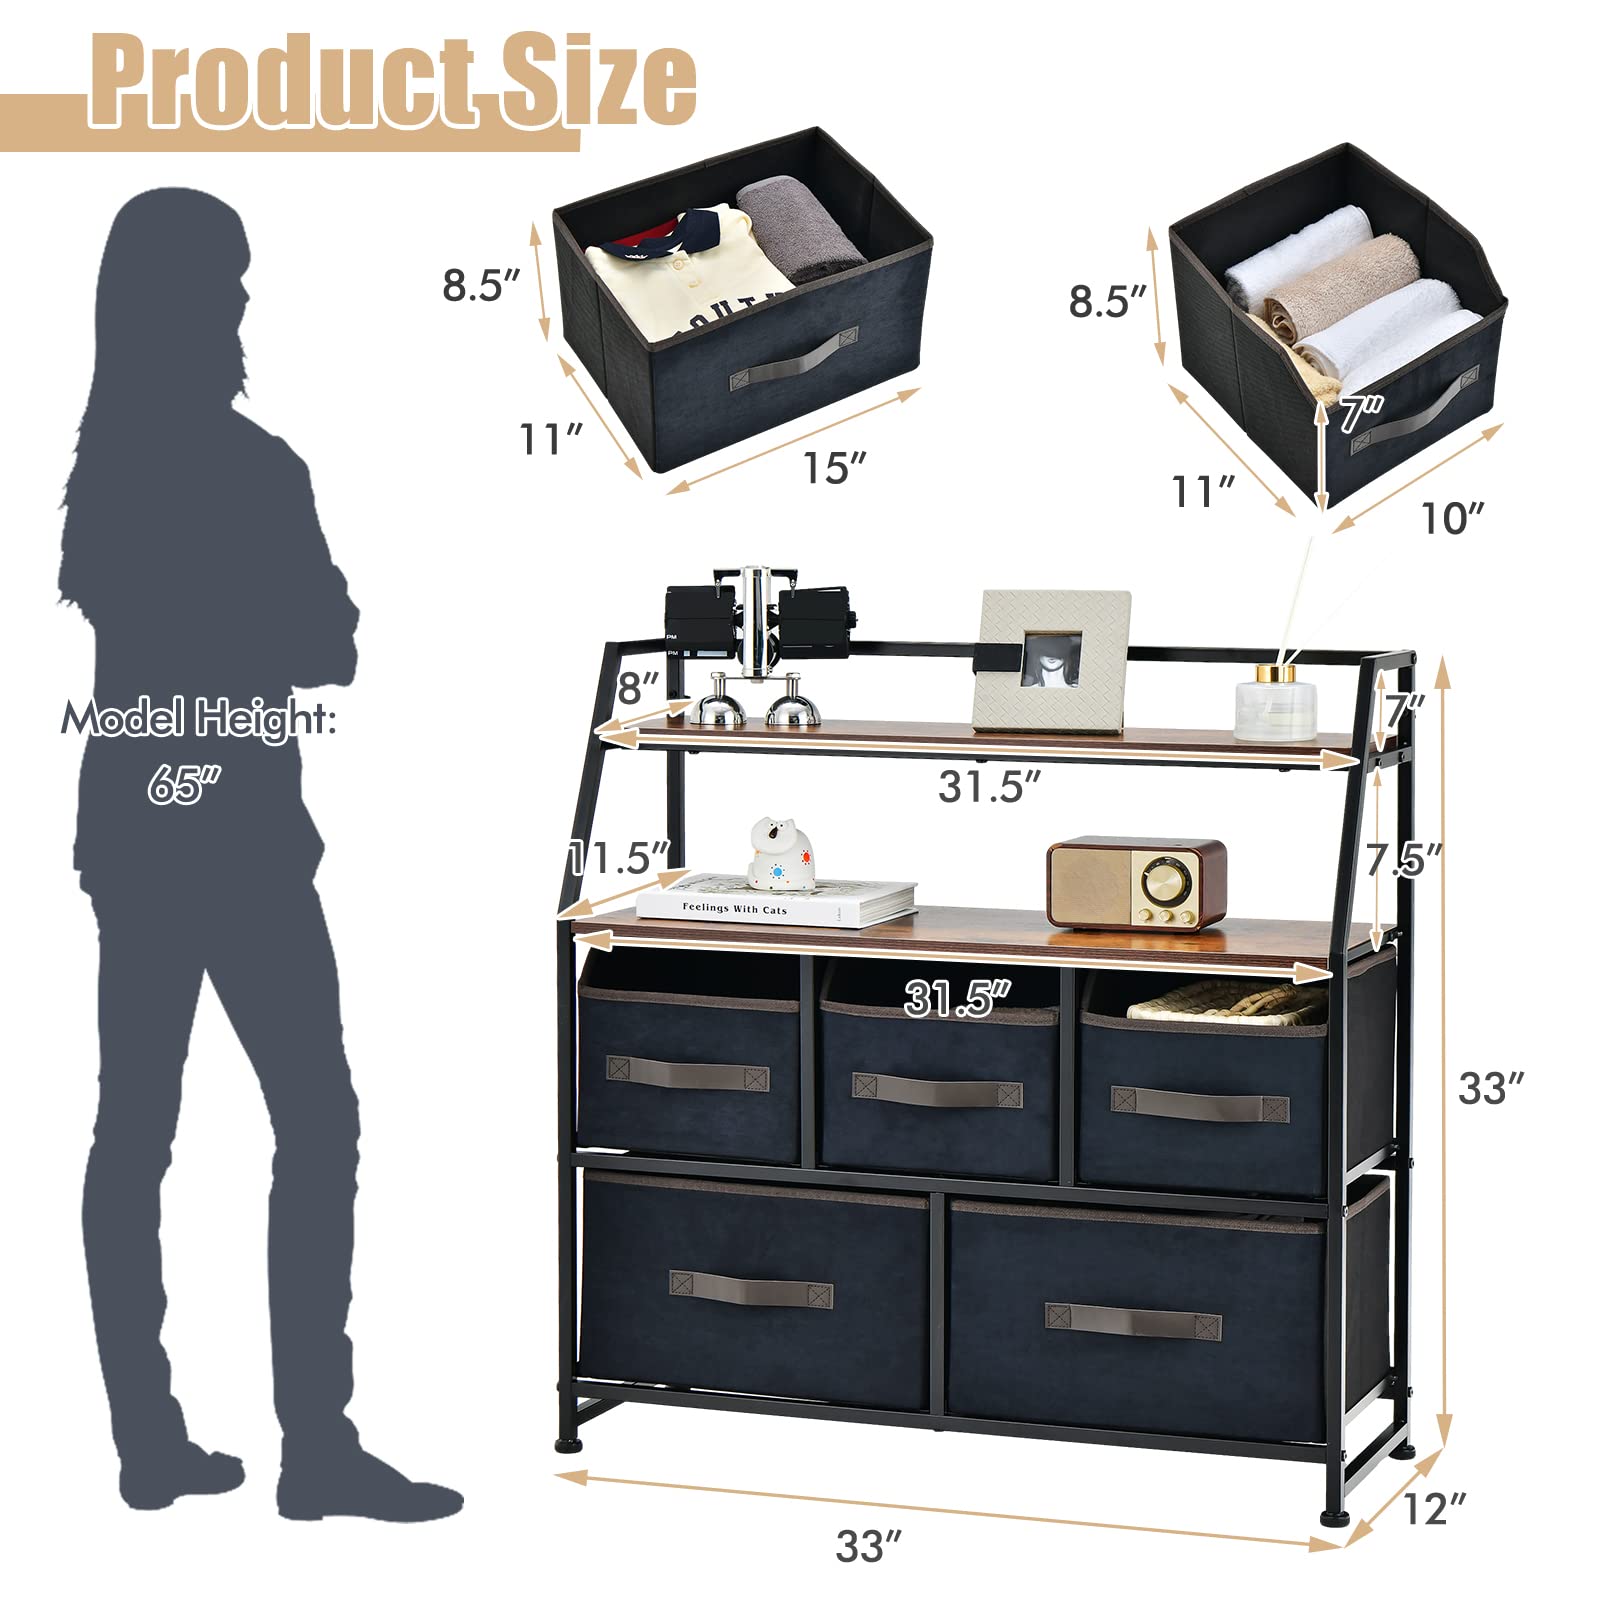 Giantex 5-Drawer Storage Dresser Organizer - Drawer Unit with Top Shelf, Anti-Toppling Design